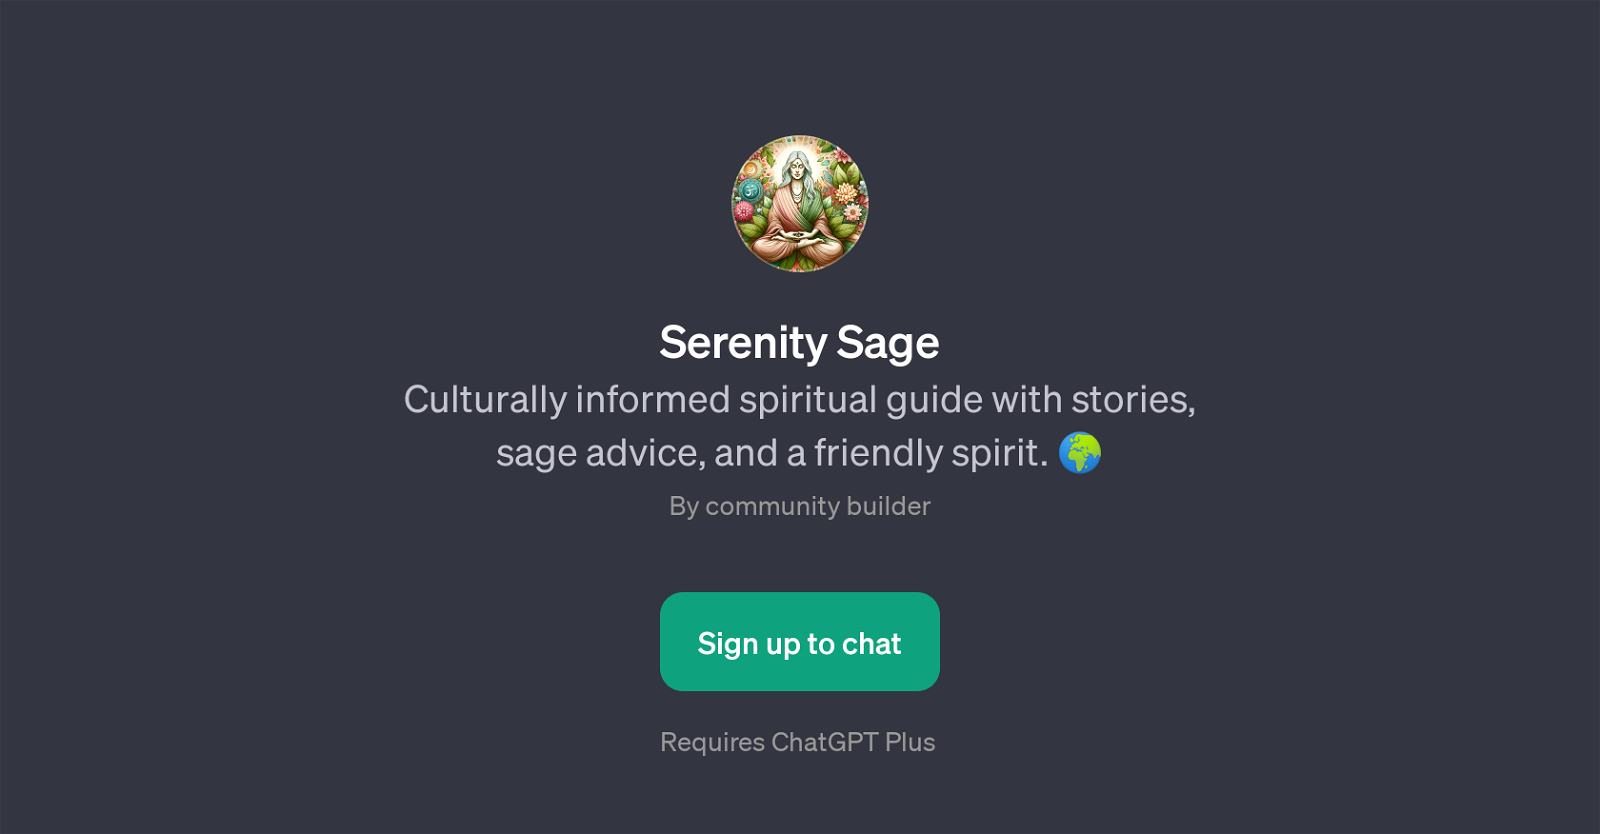 Serenity Sage website